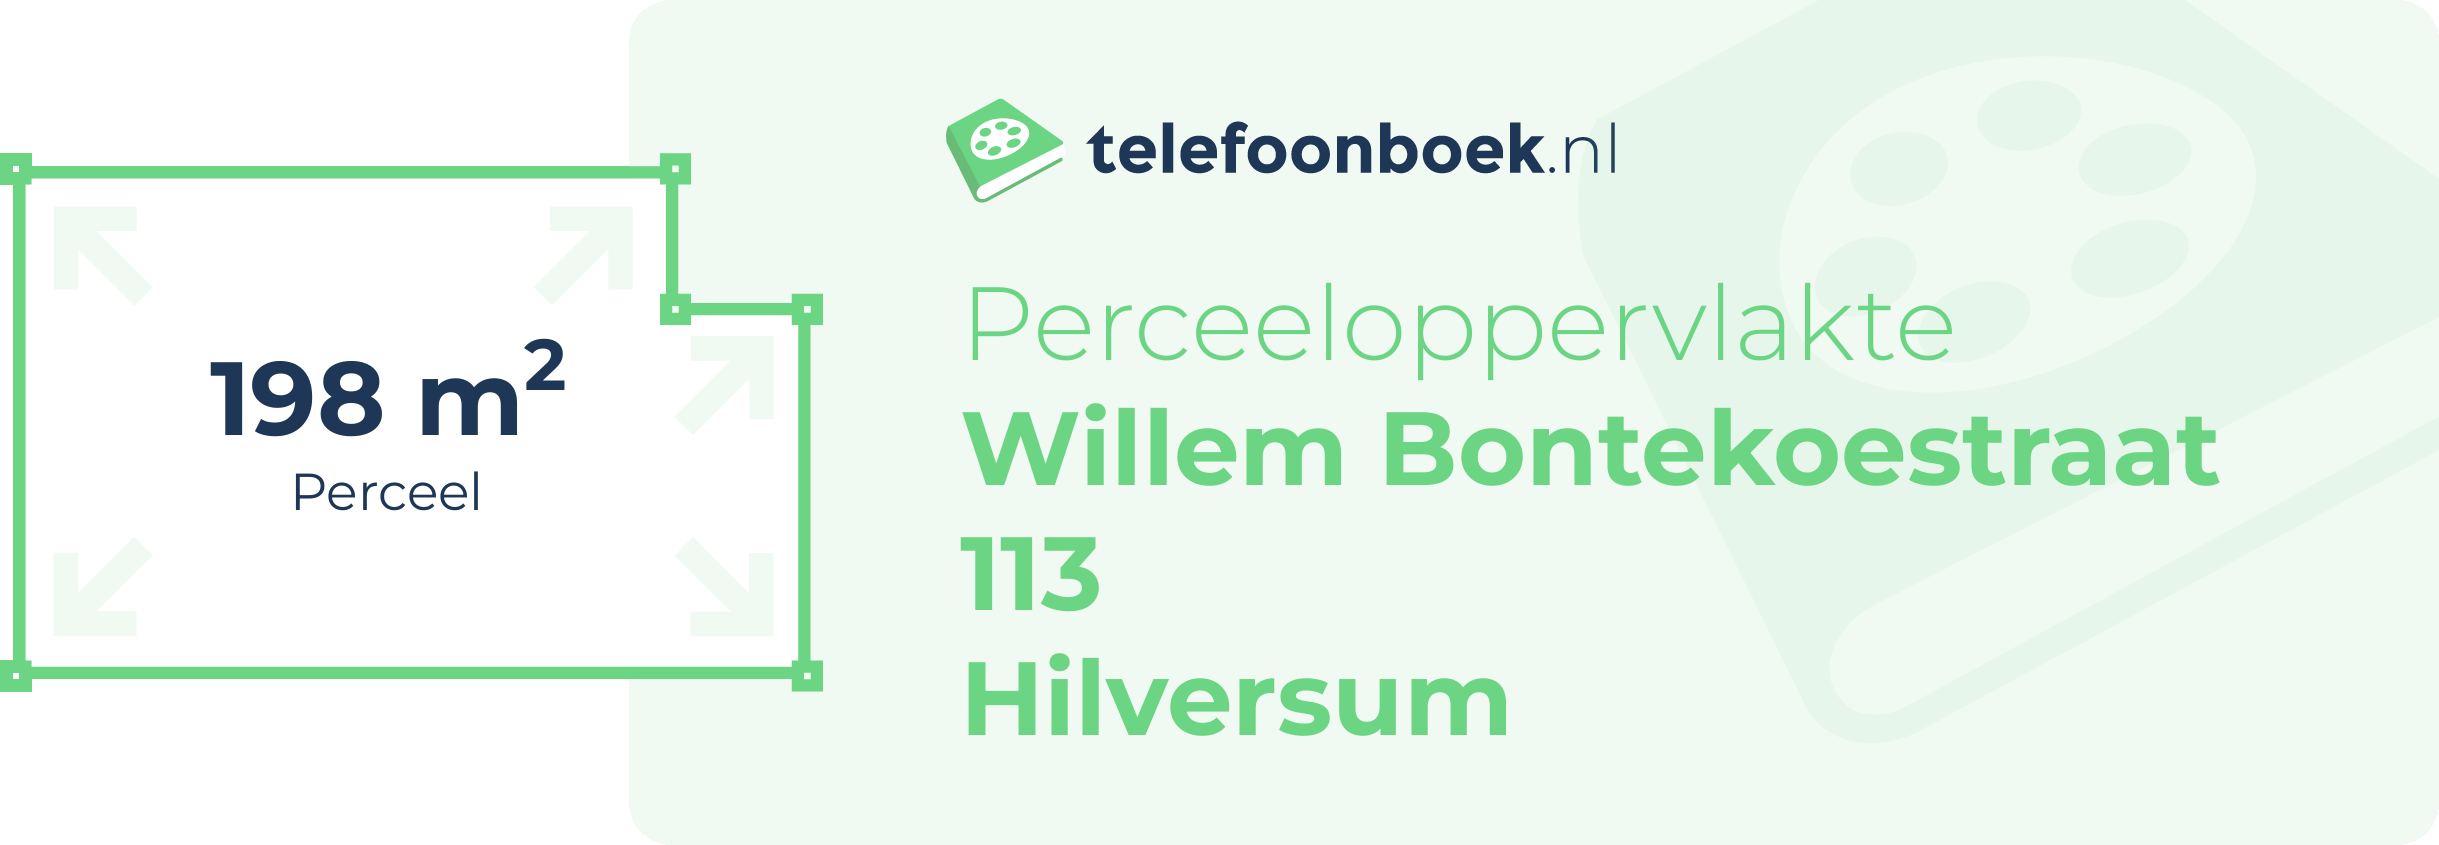 Perceeloppervlakte Willem Bontekoestraat 113 Hilversum